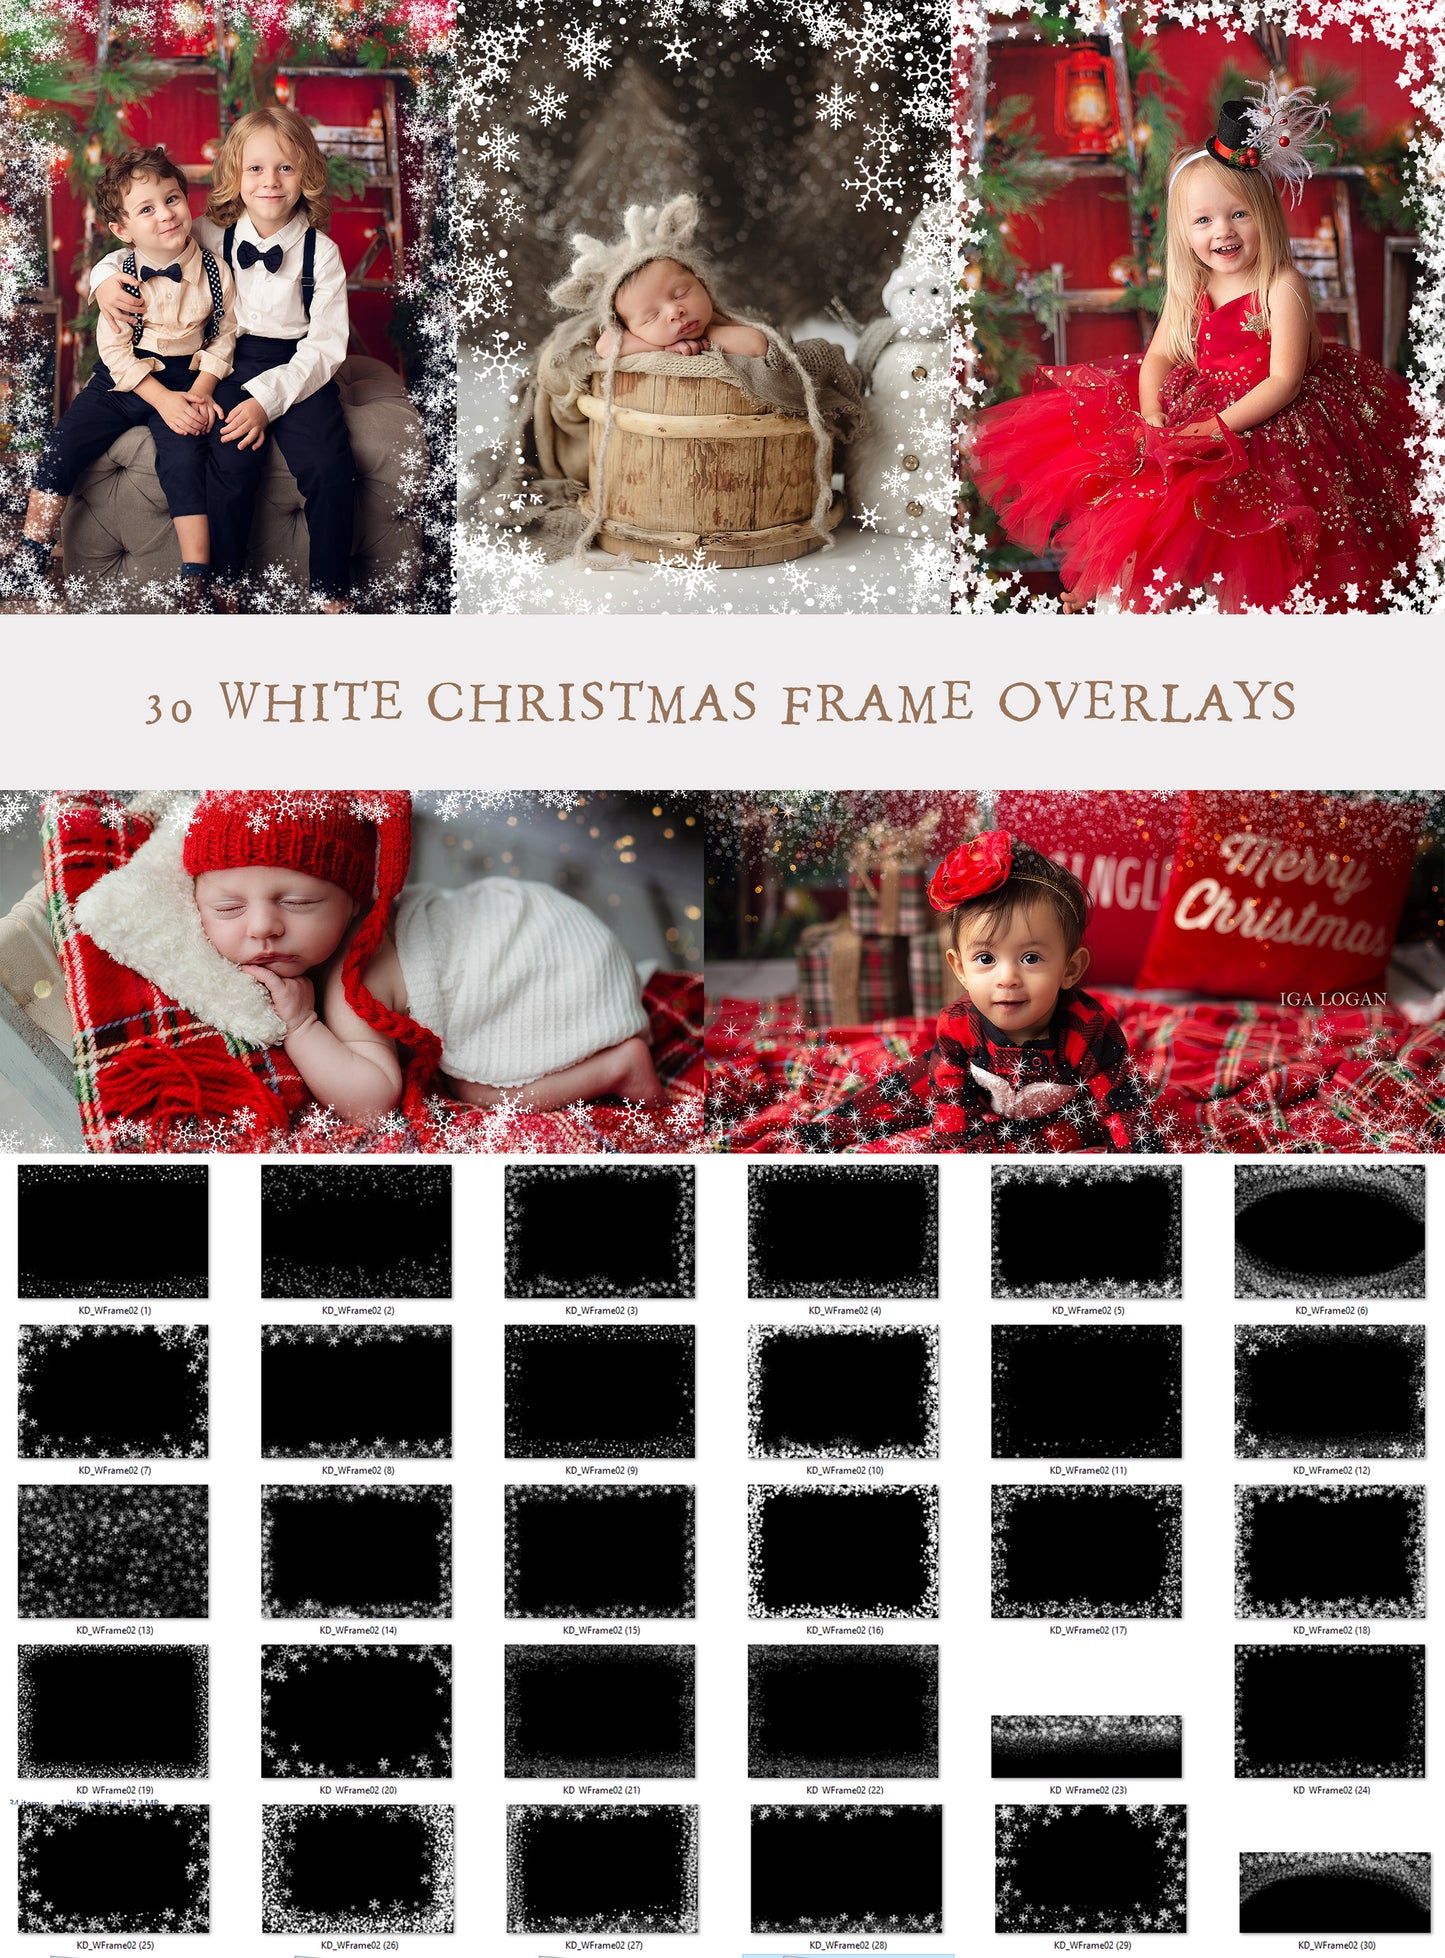 White Christmas Photo Frame Overlays